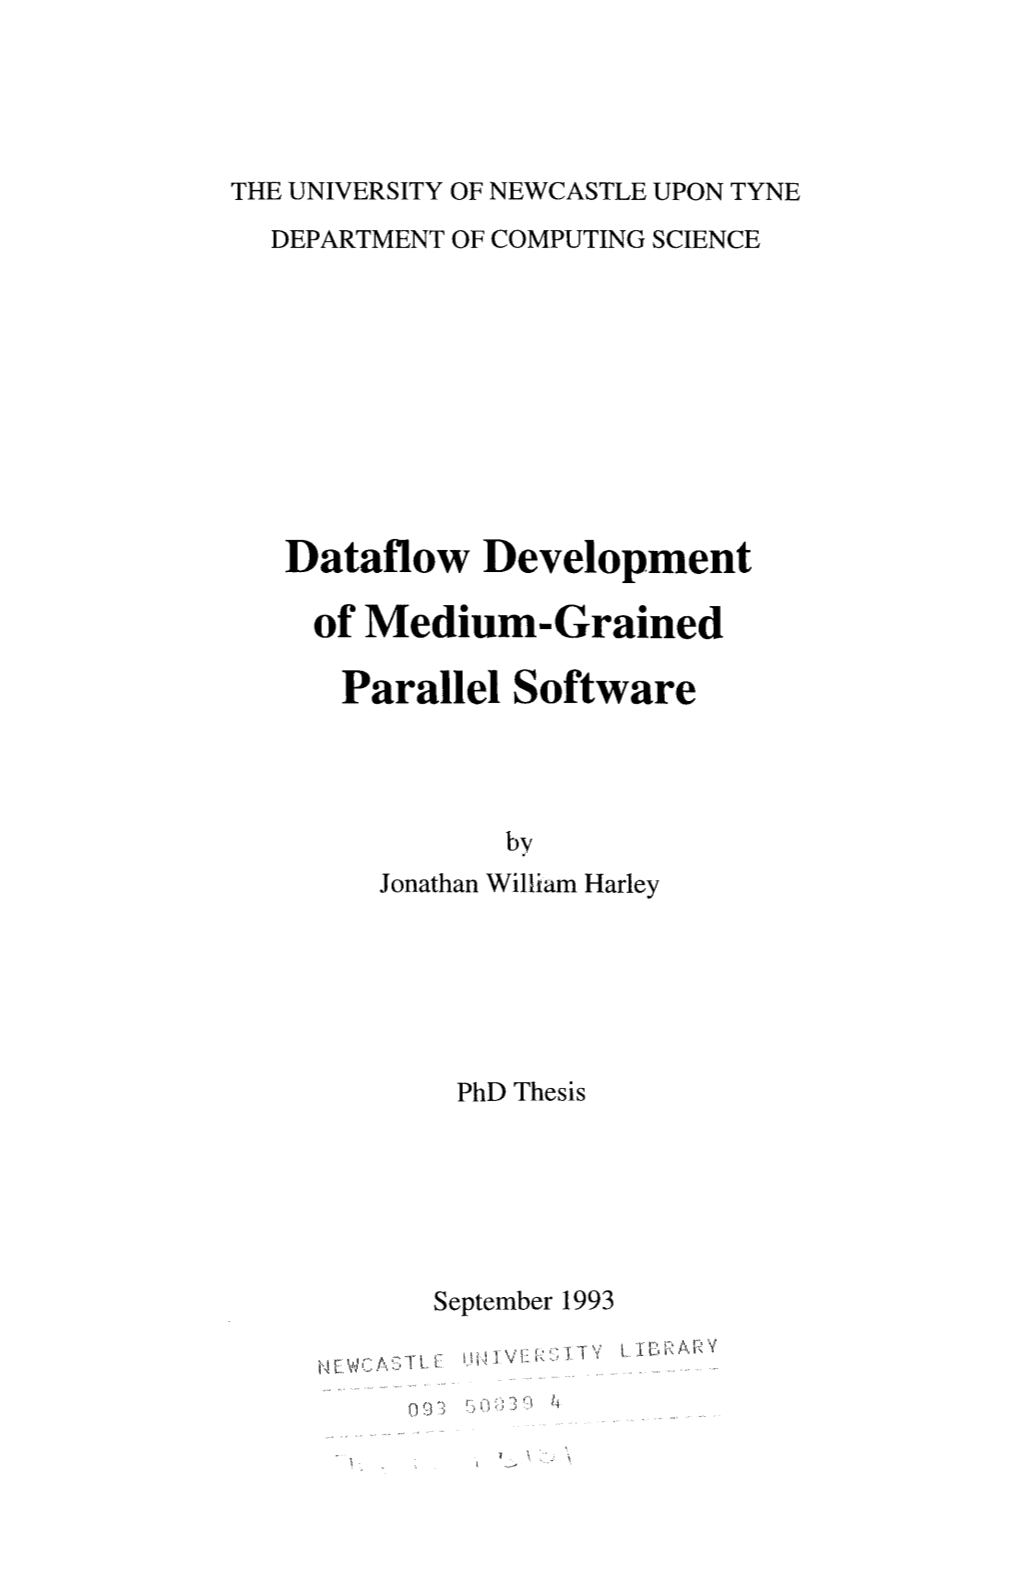 Dataflow Development of Medium-Grained Parallel Software